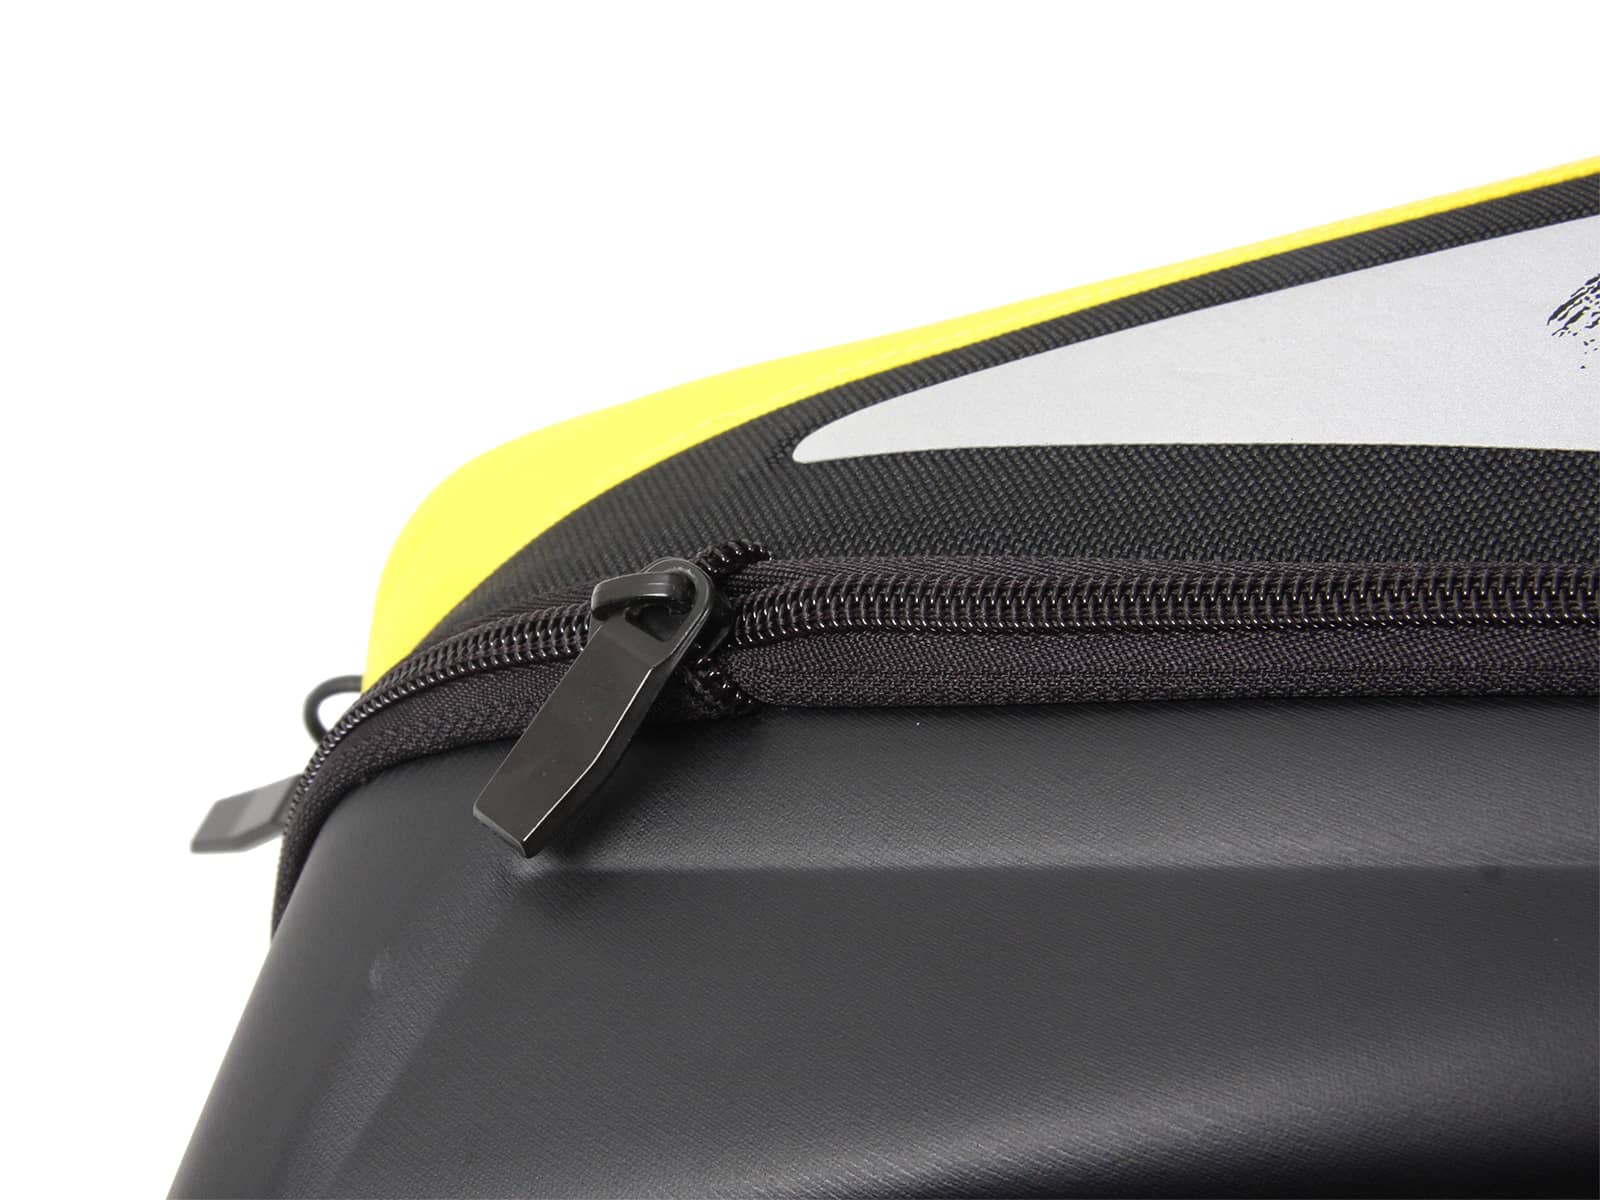 Tankbag Royster 5-8 ltr. black/yellow